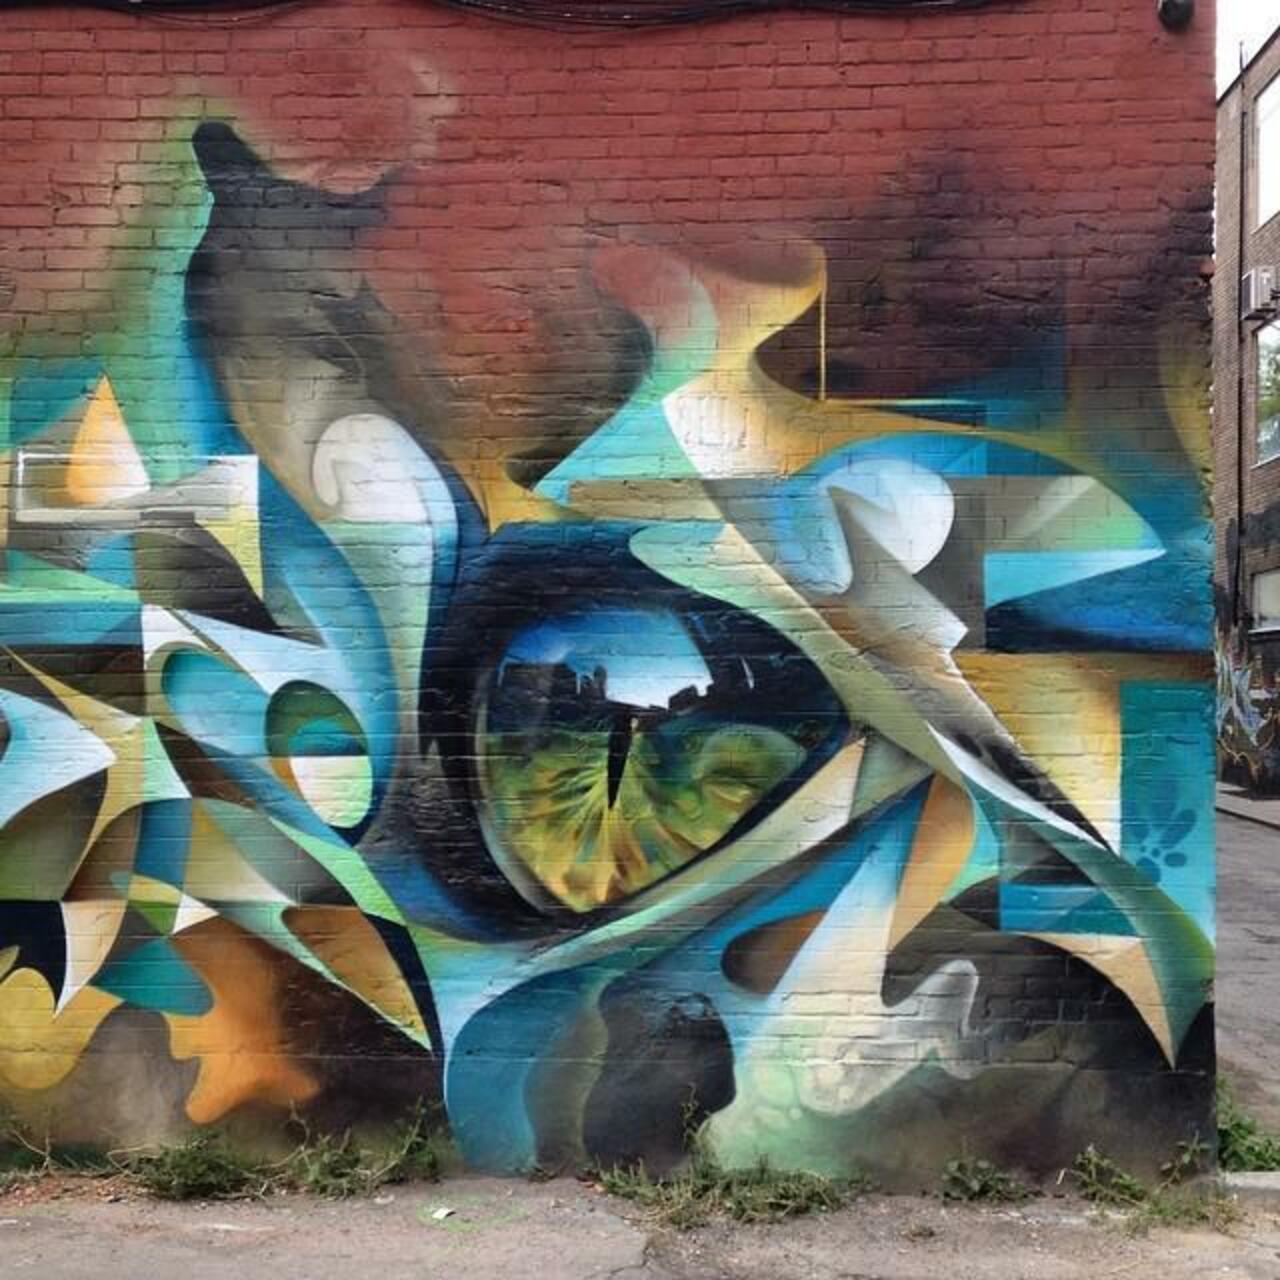 RT @StArtEverywhere: This cat eye is awesome! #toronto #art #streetart #graffiti #graffitti #ontario #streetarttoronto #eye #wall by god… http://t.co/u9n9UII0rV